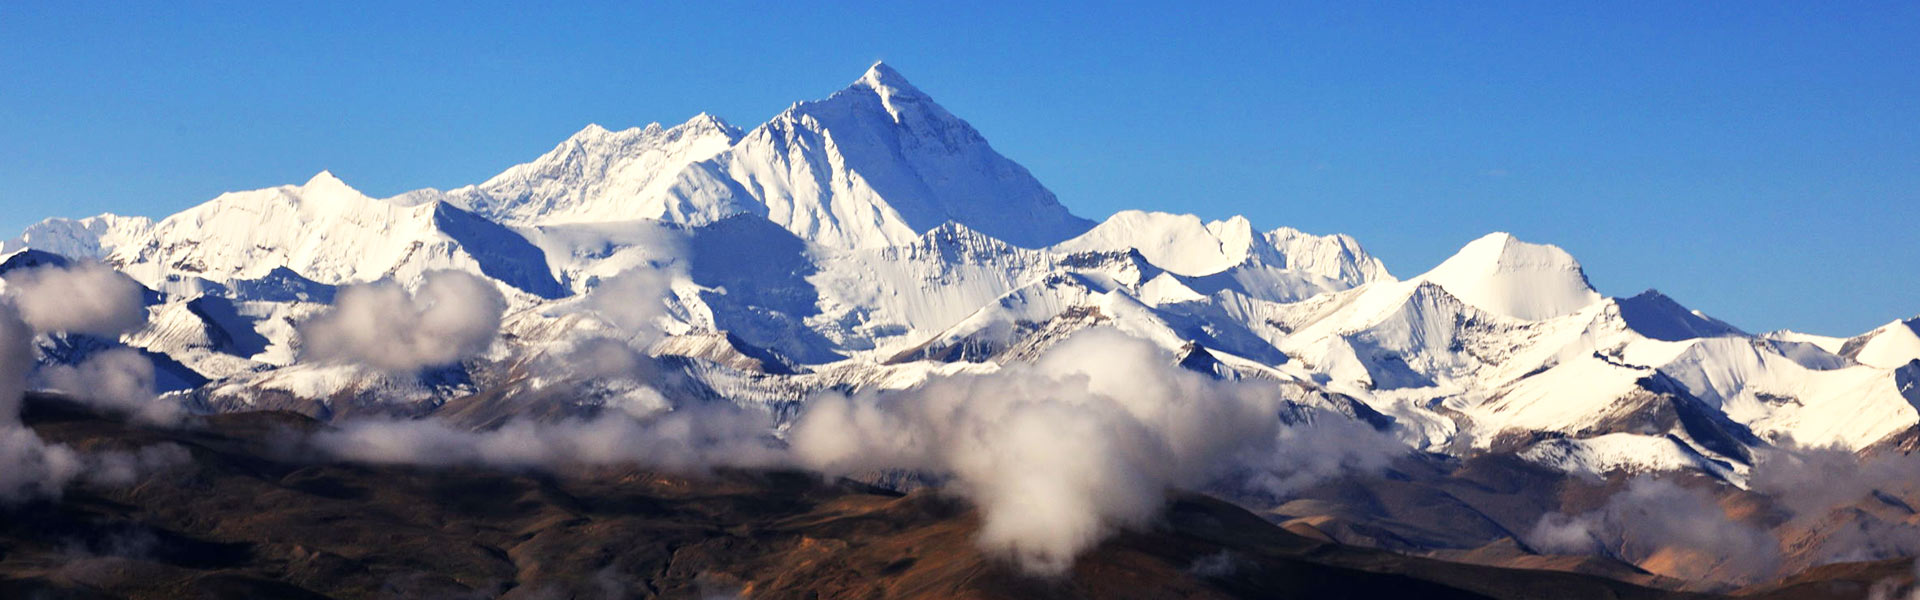 Mount Everest Tours